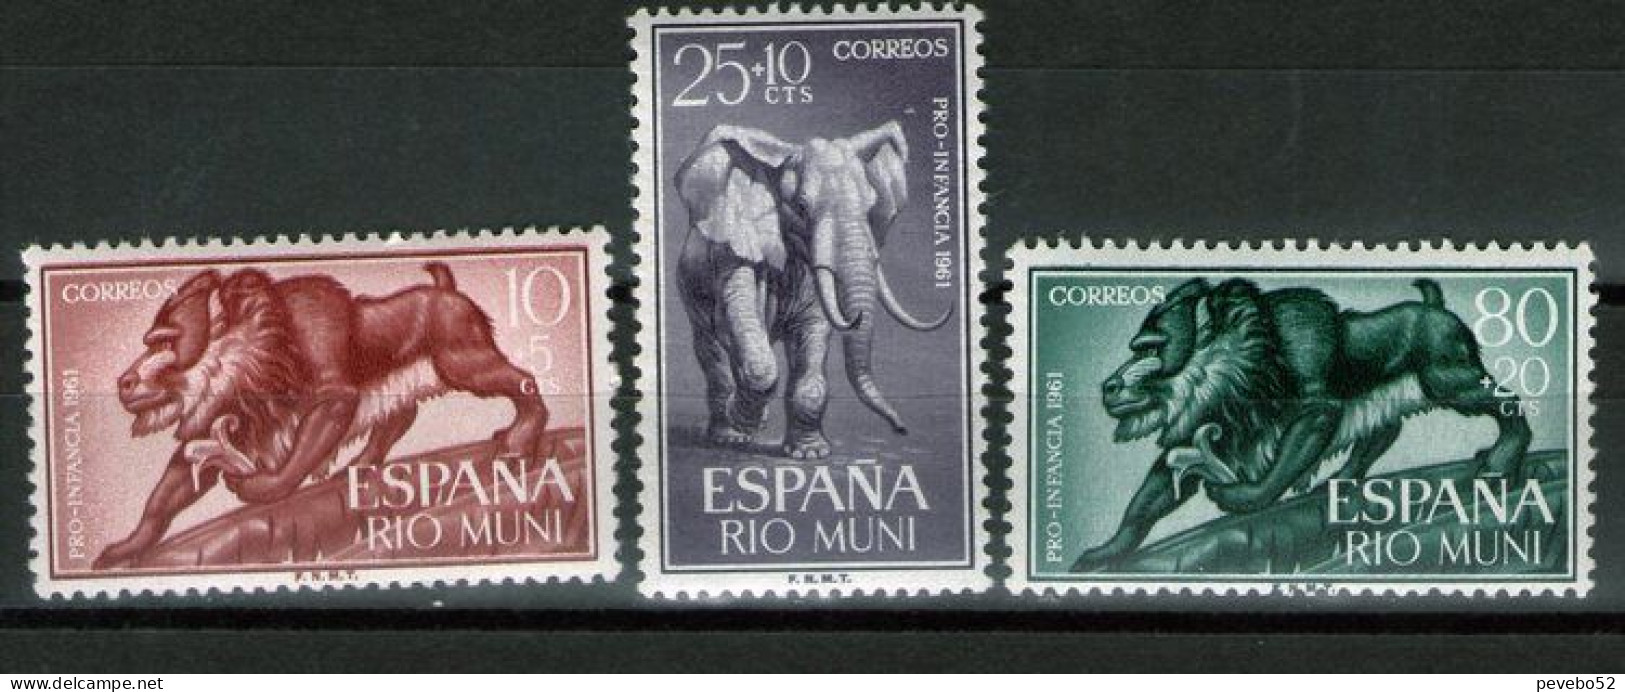 SPAINISHRIO MUNI 1961 - For The Youth MNH - Rio Muni